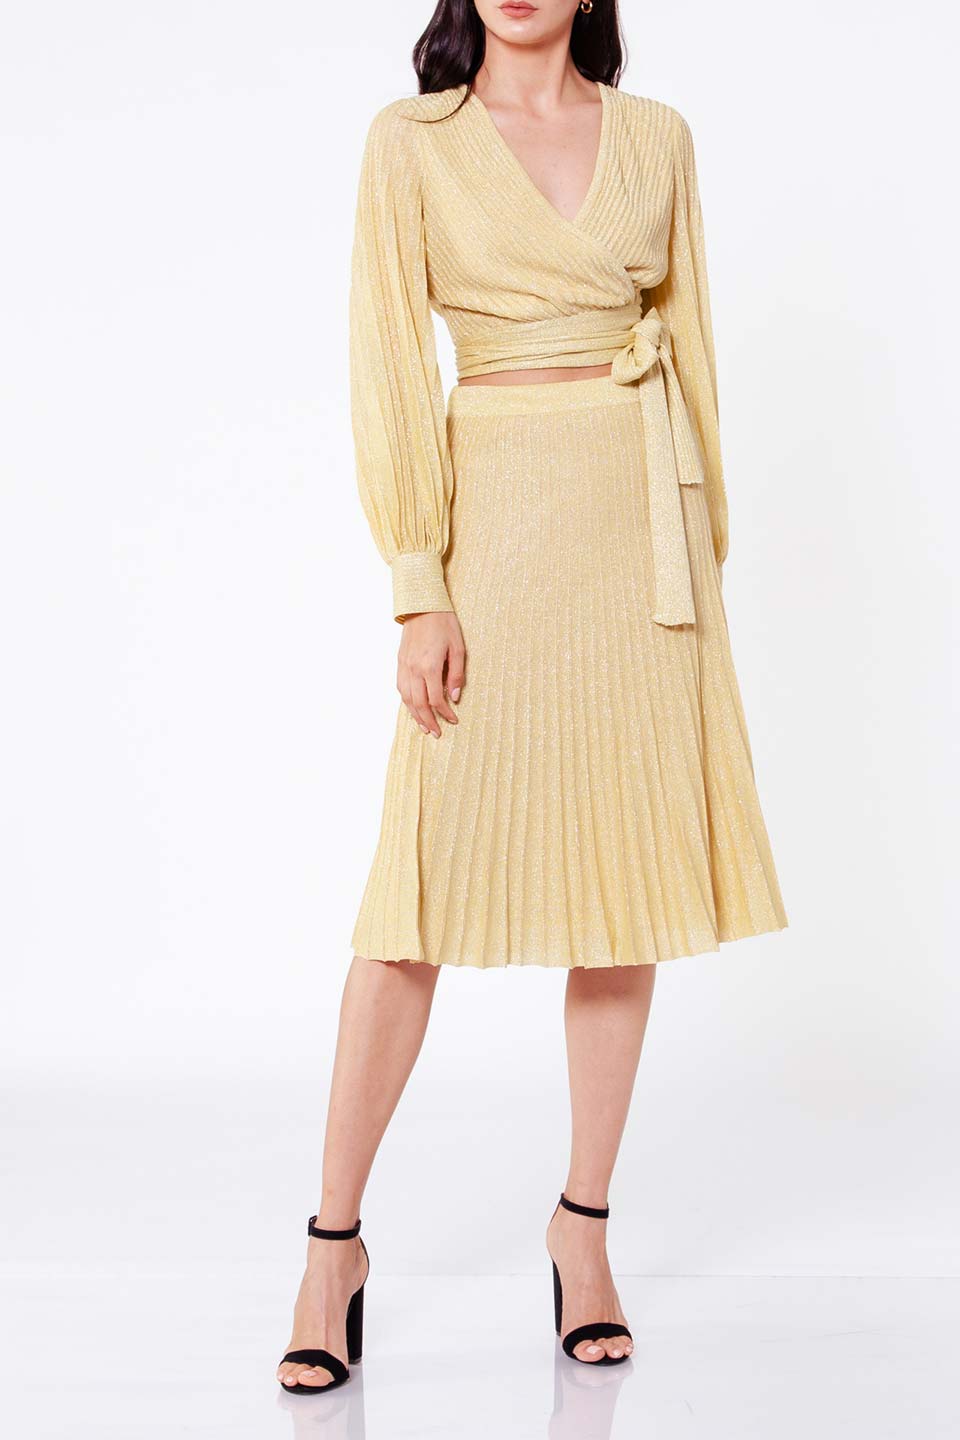 Shop online trendy Yellow Skirts from Kukhareva London Fashion designer. Product gallery 1